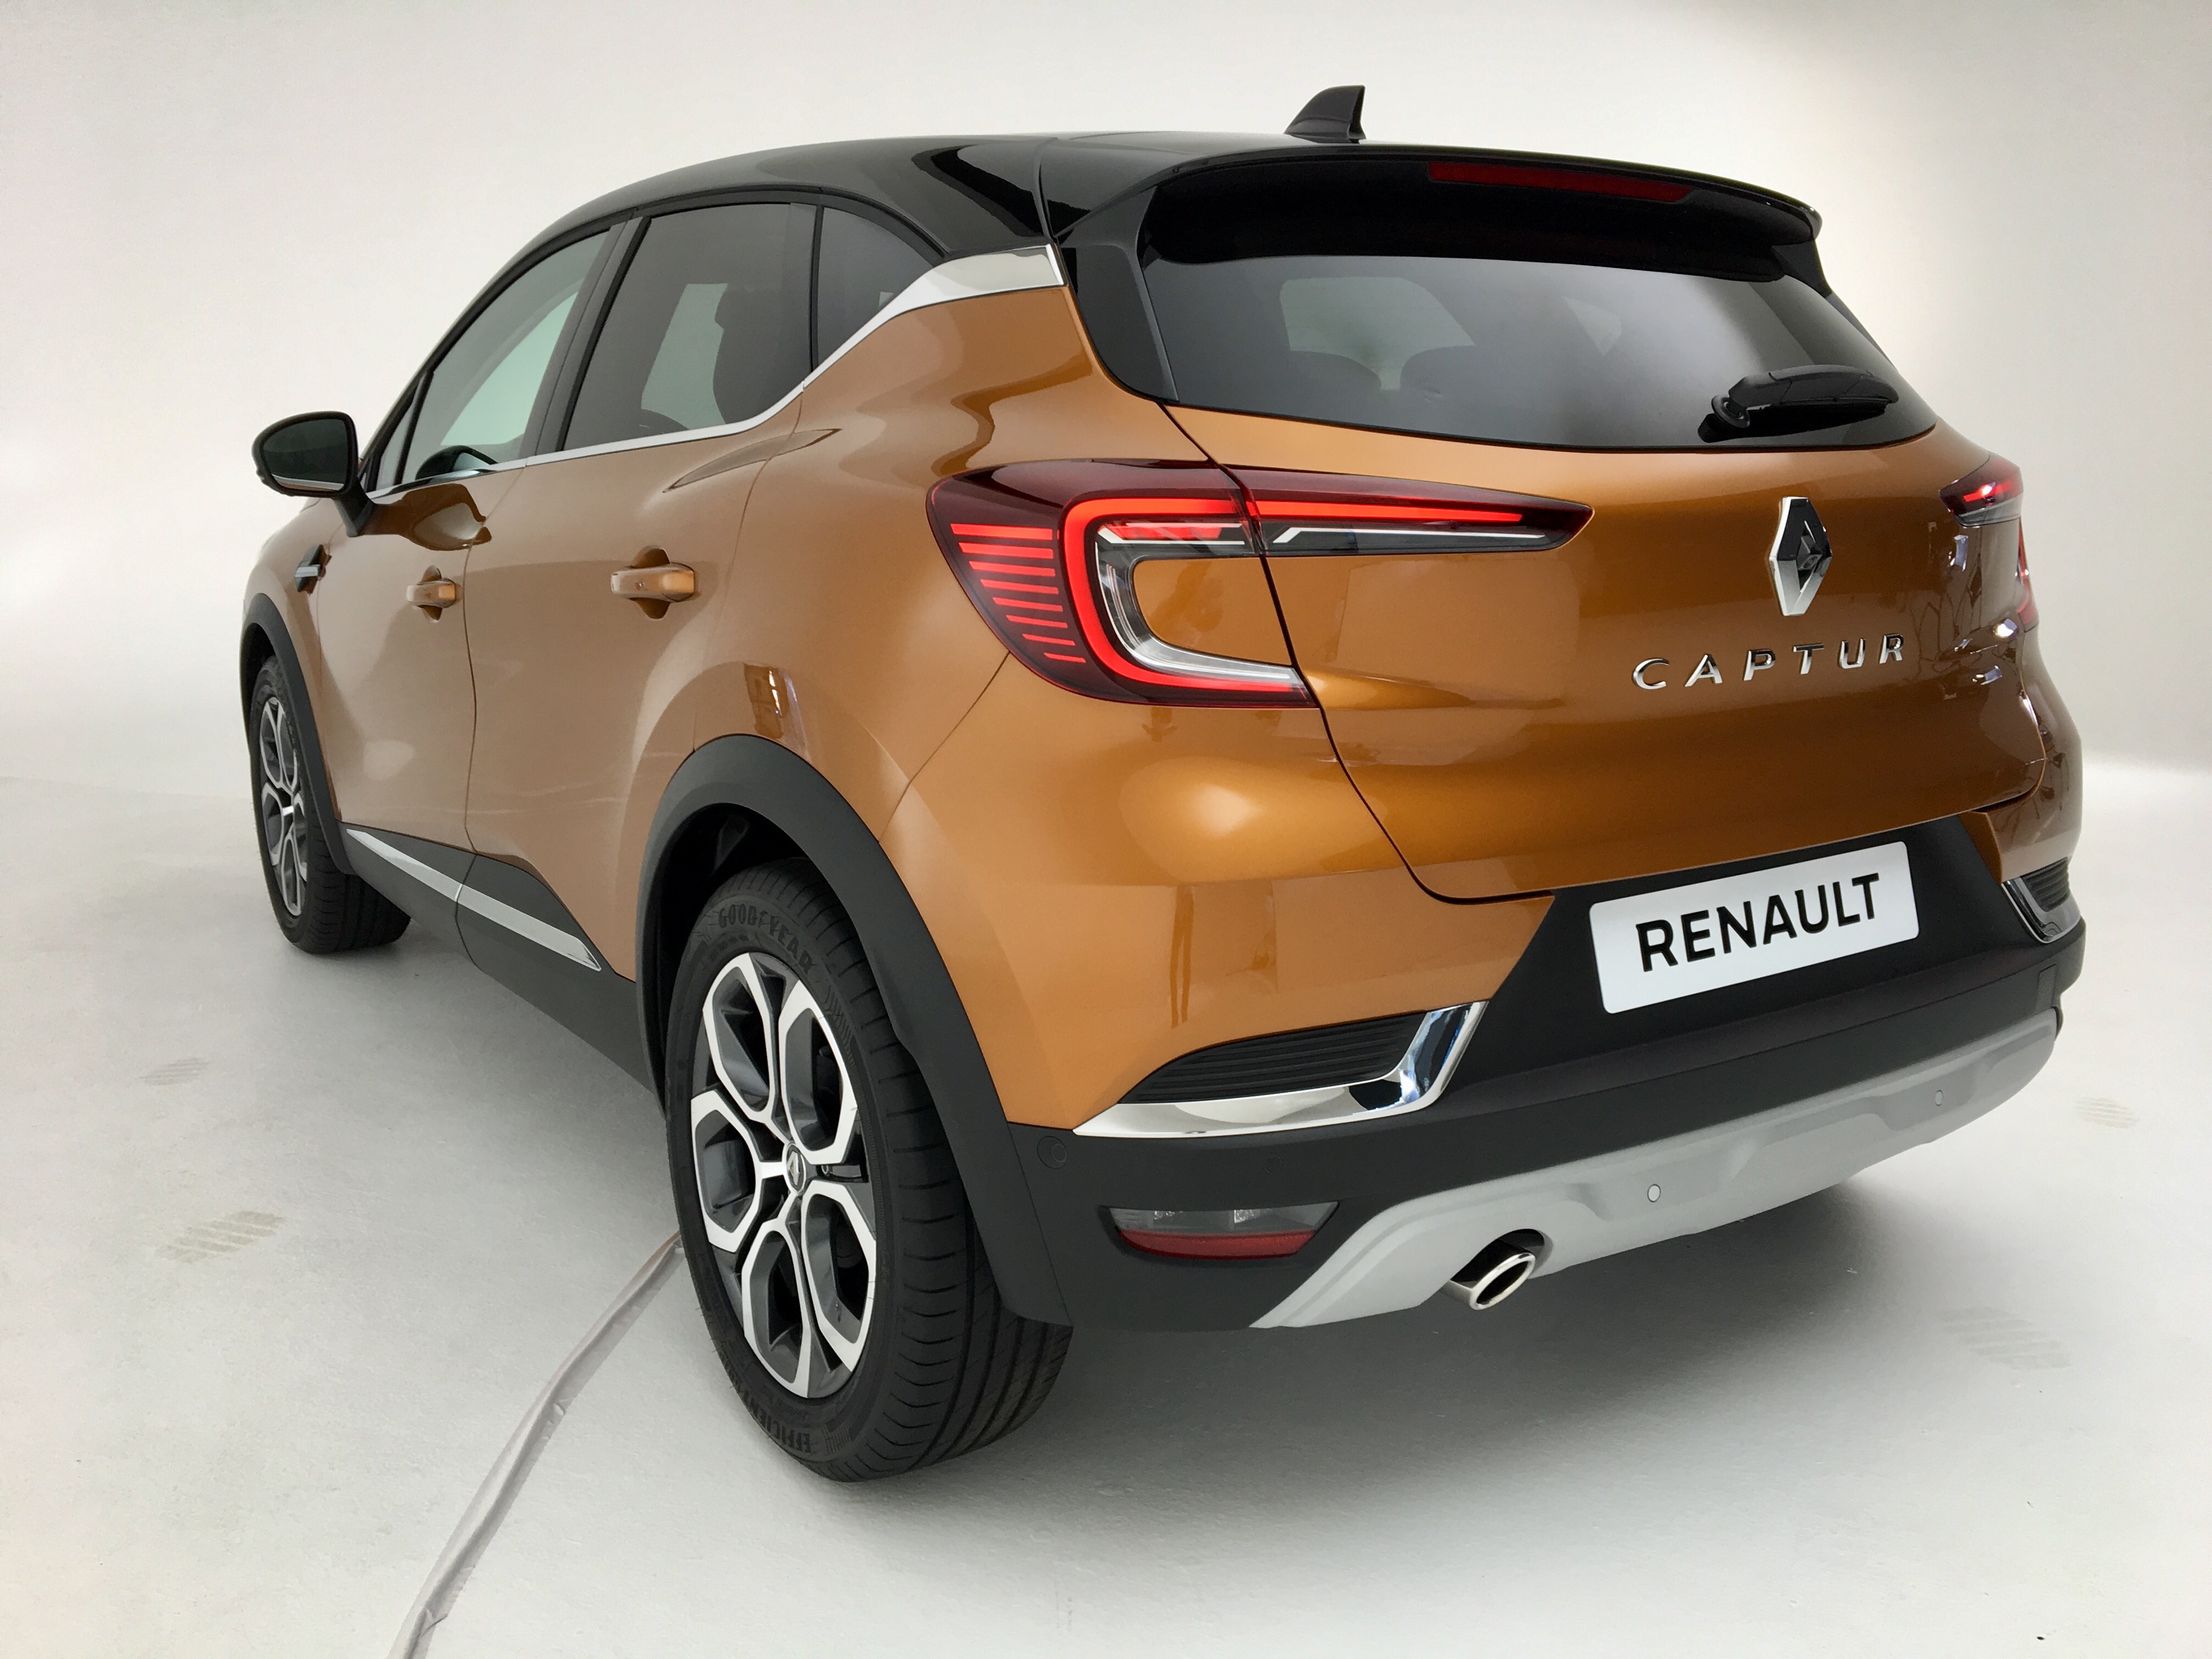 Renault Captur mod specifications